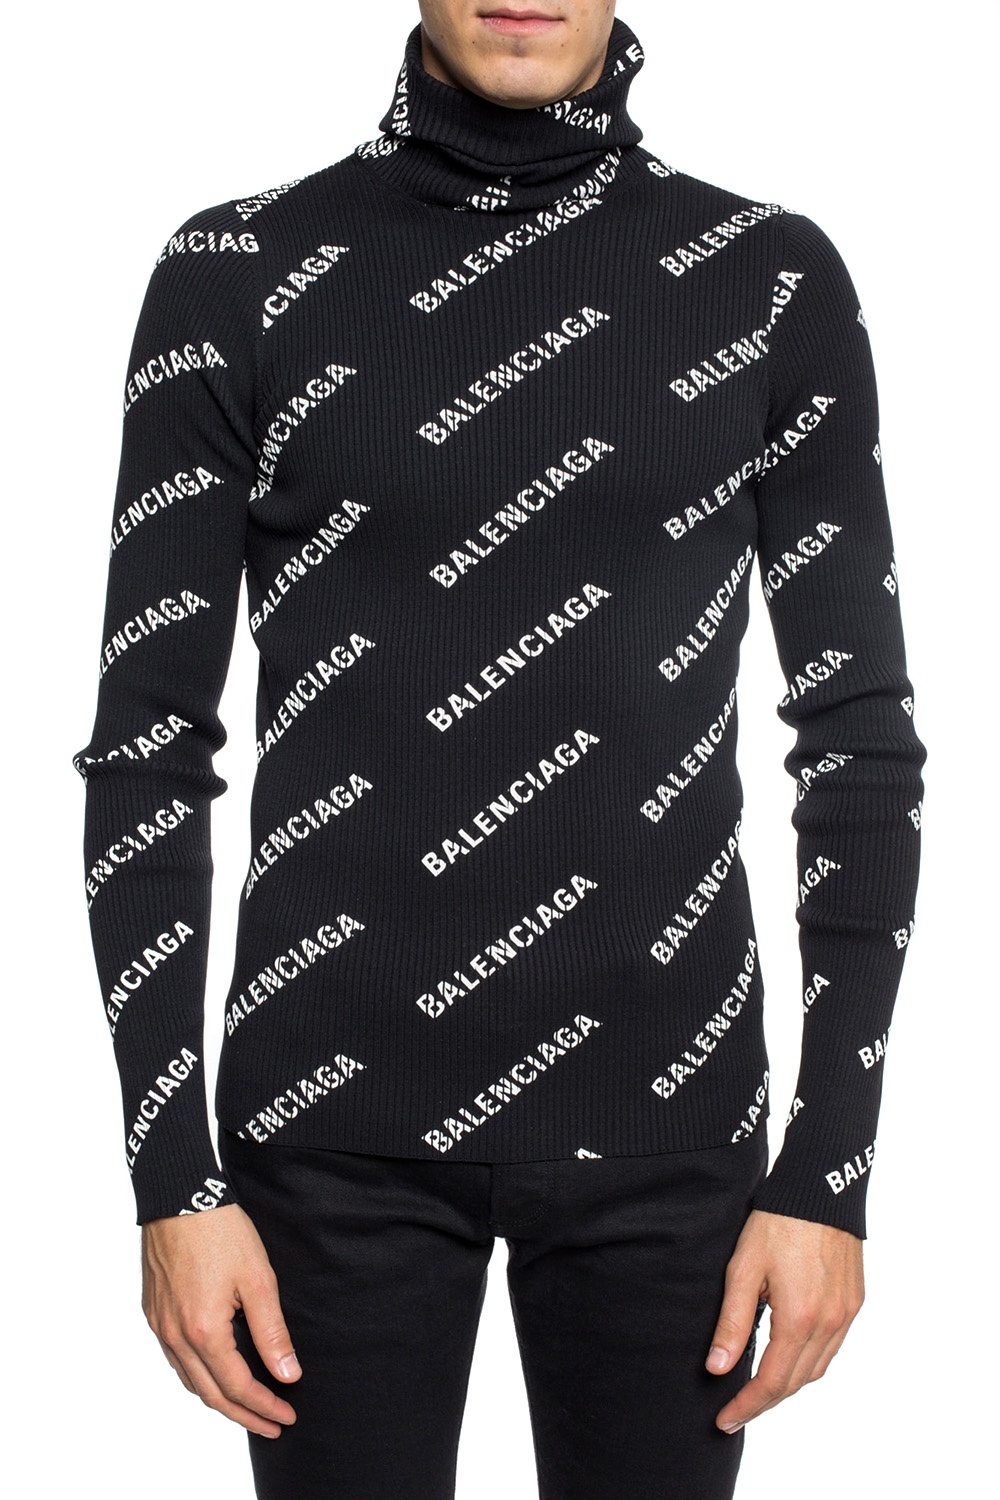 Balenciaga Ribbed turtleneck sweater with logo | Men's Clothing ...